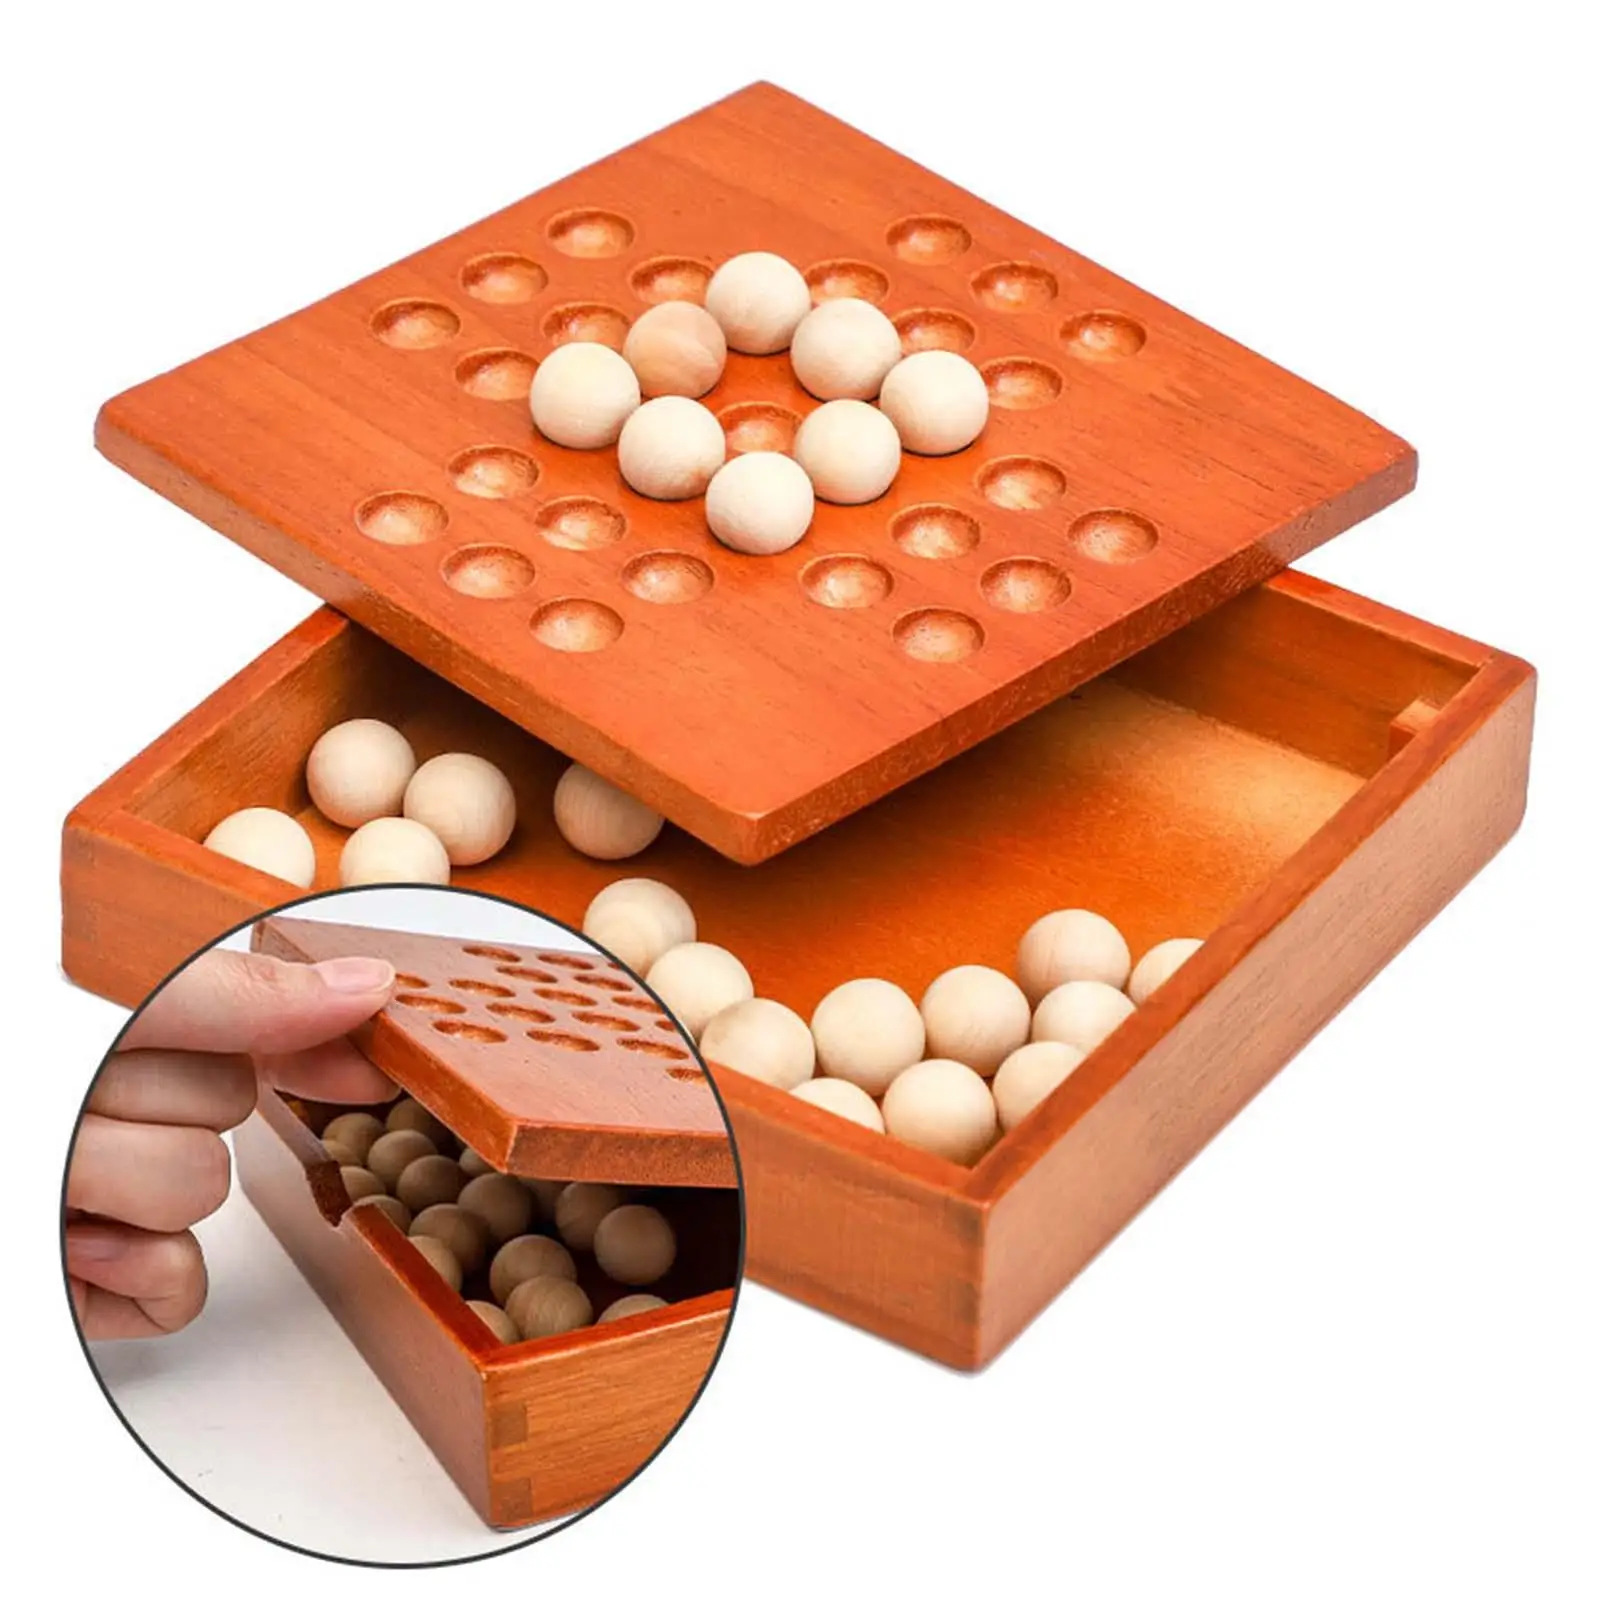 Wooden Solitaire Board Game Intellectual Development Teaser IQ Puzzle